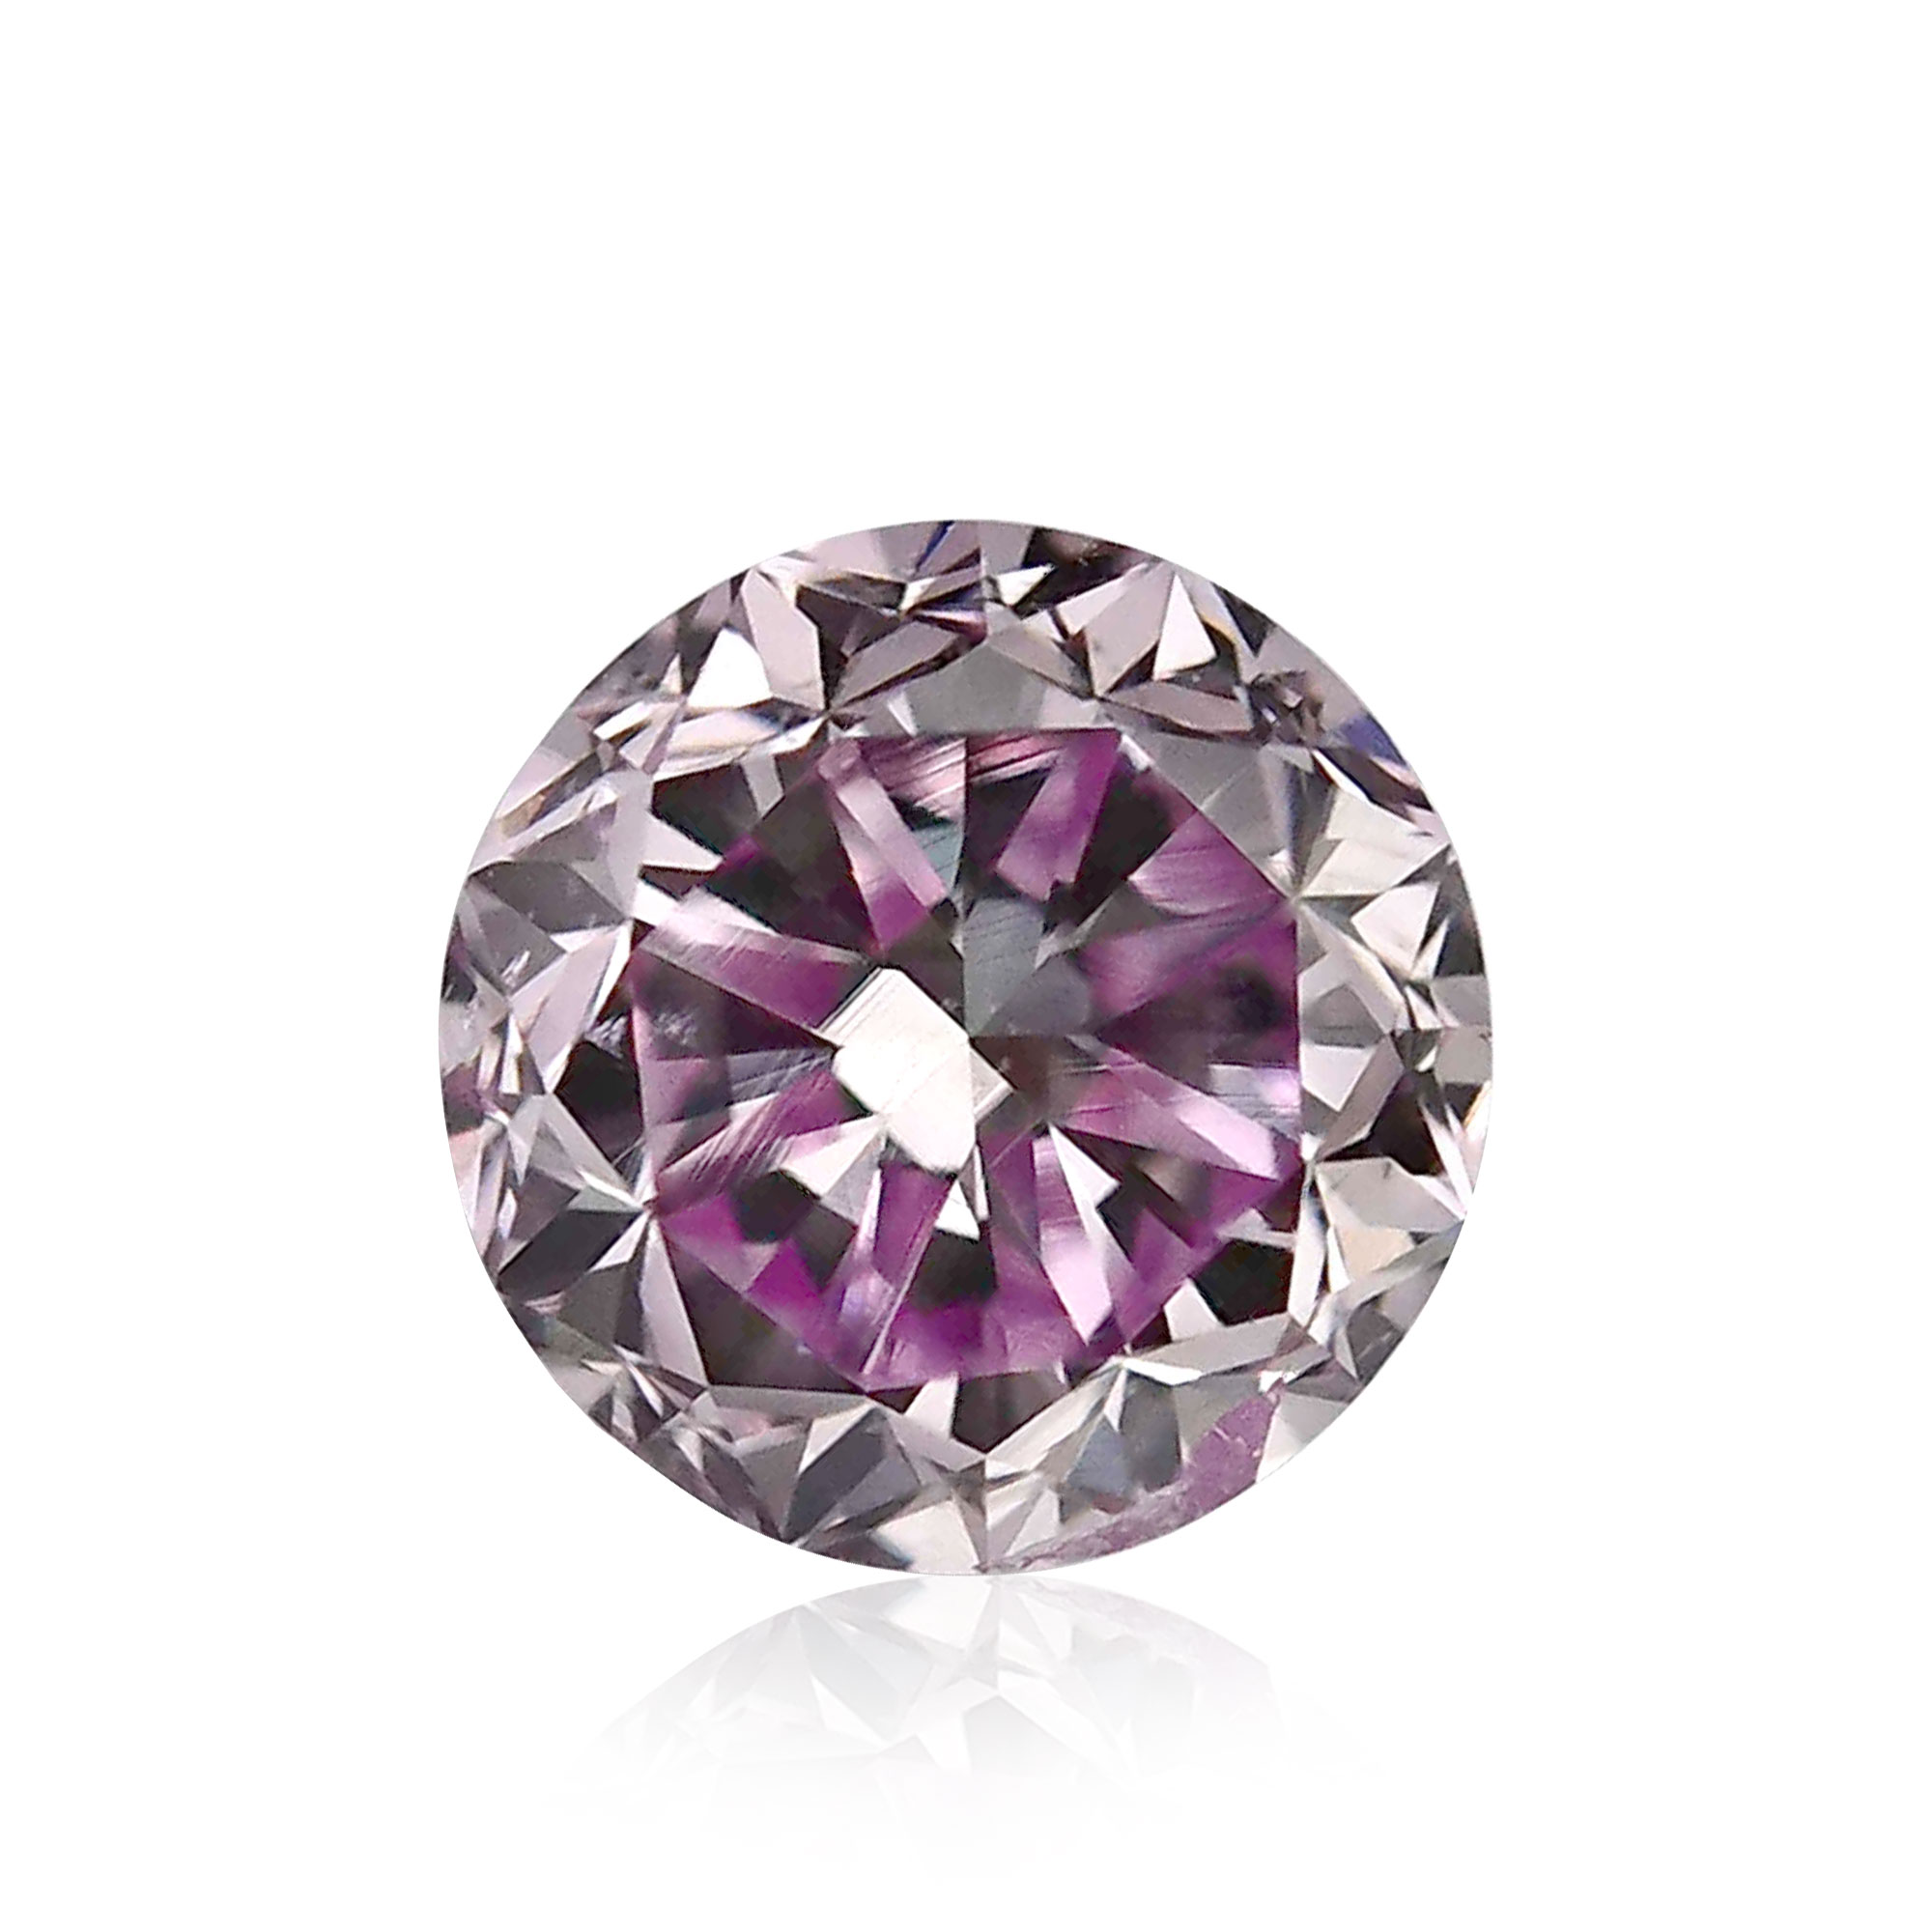 0.42 carat, Fancy Pink Purple Diamond, Round Shape, I1 Clarity, GIA, SKU  162831